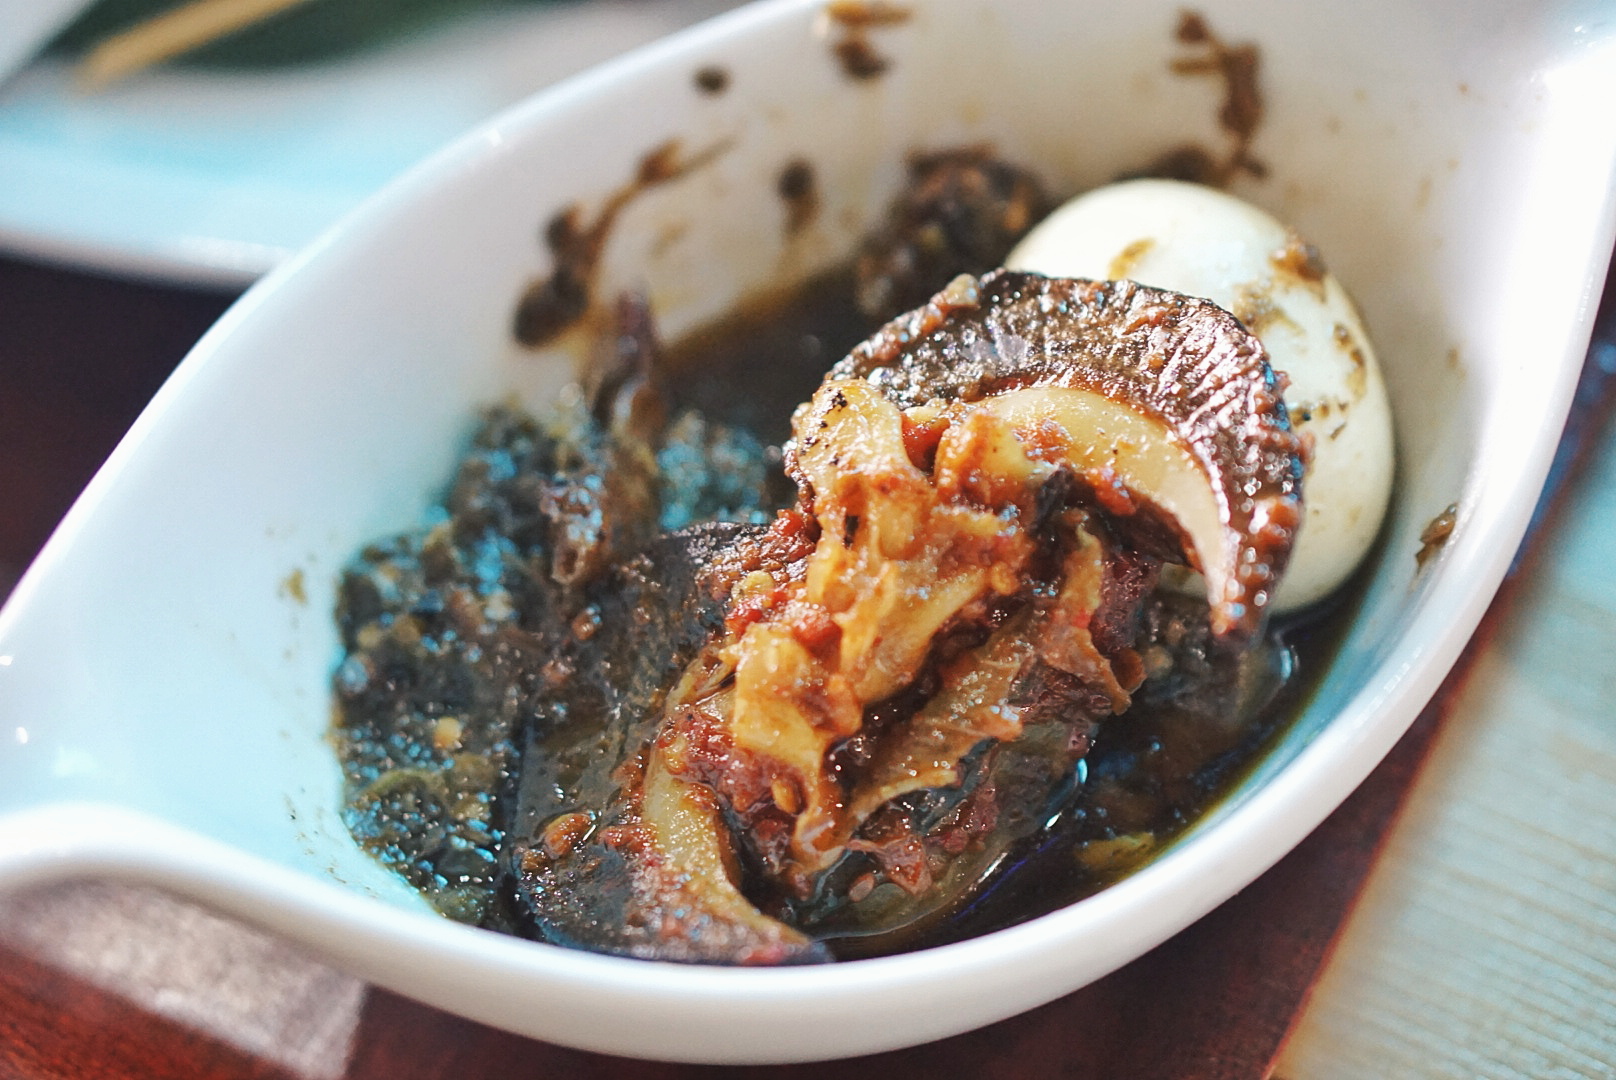 snail in ofada sauce